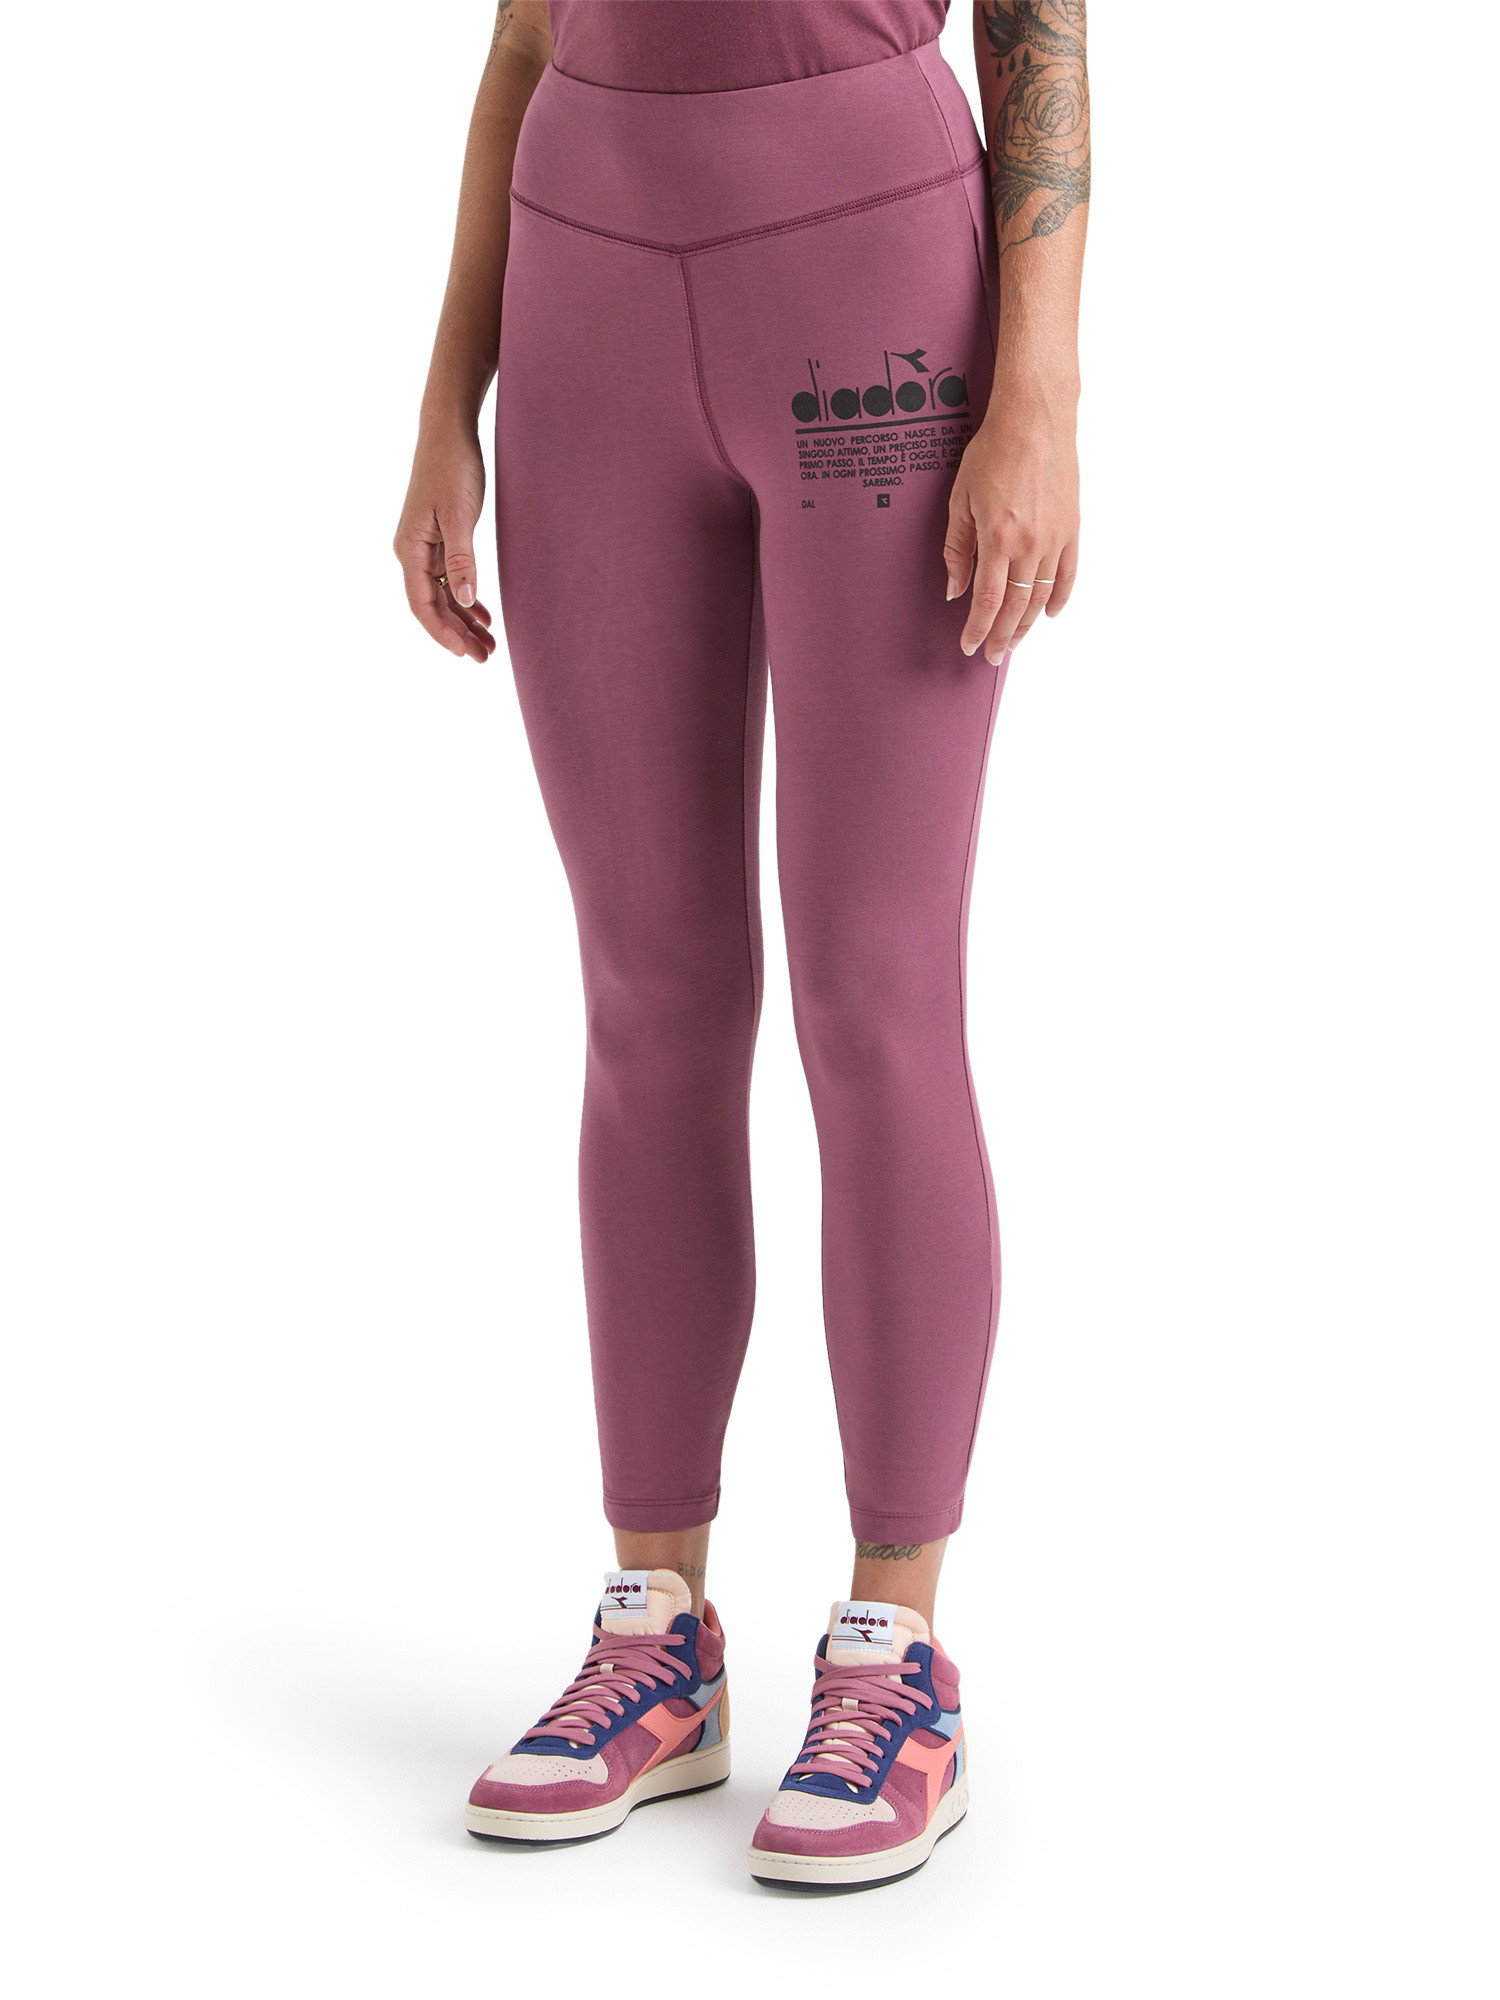 Diadora - Manifesto leggings with logo, Purple, large image number 2